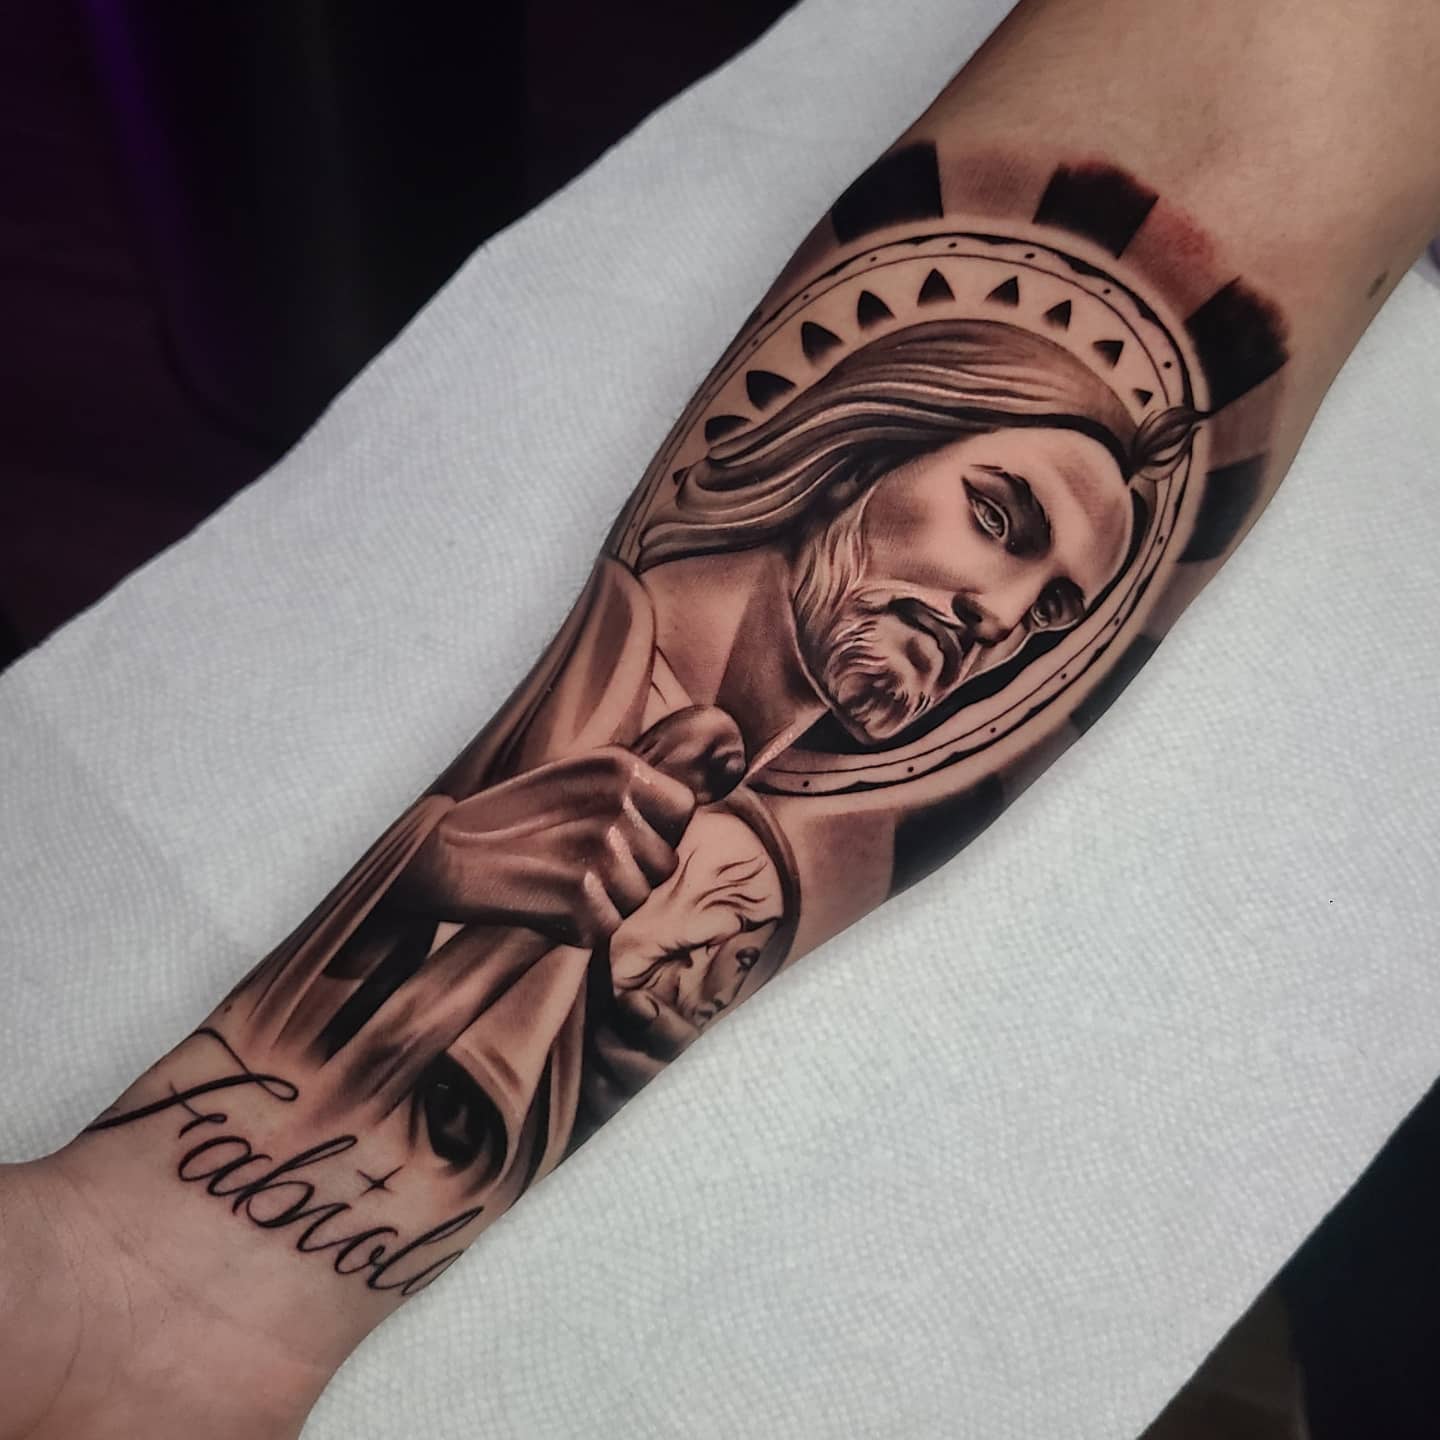 Tatuaje artístico de San Judas